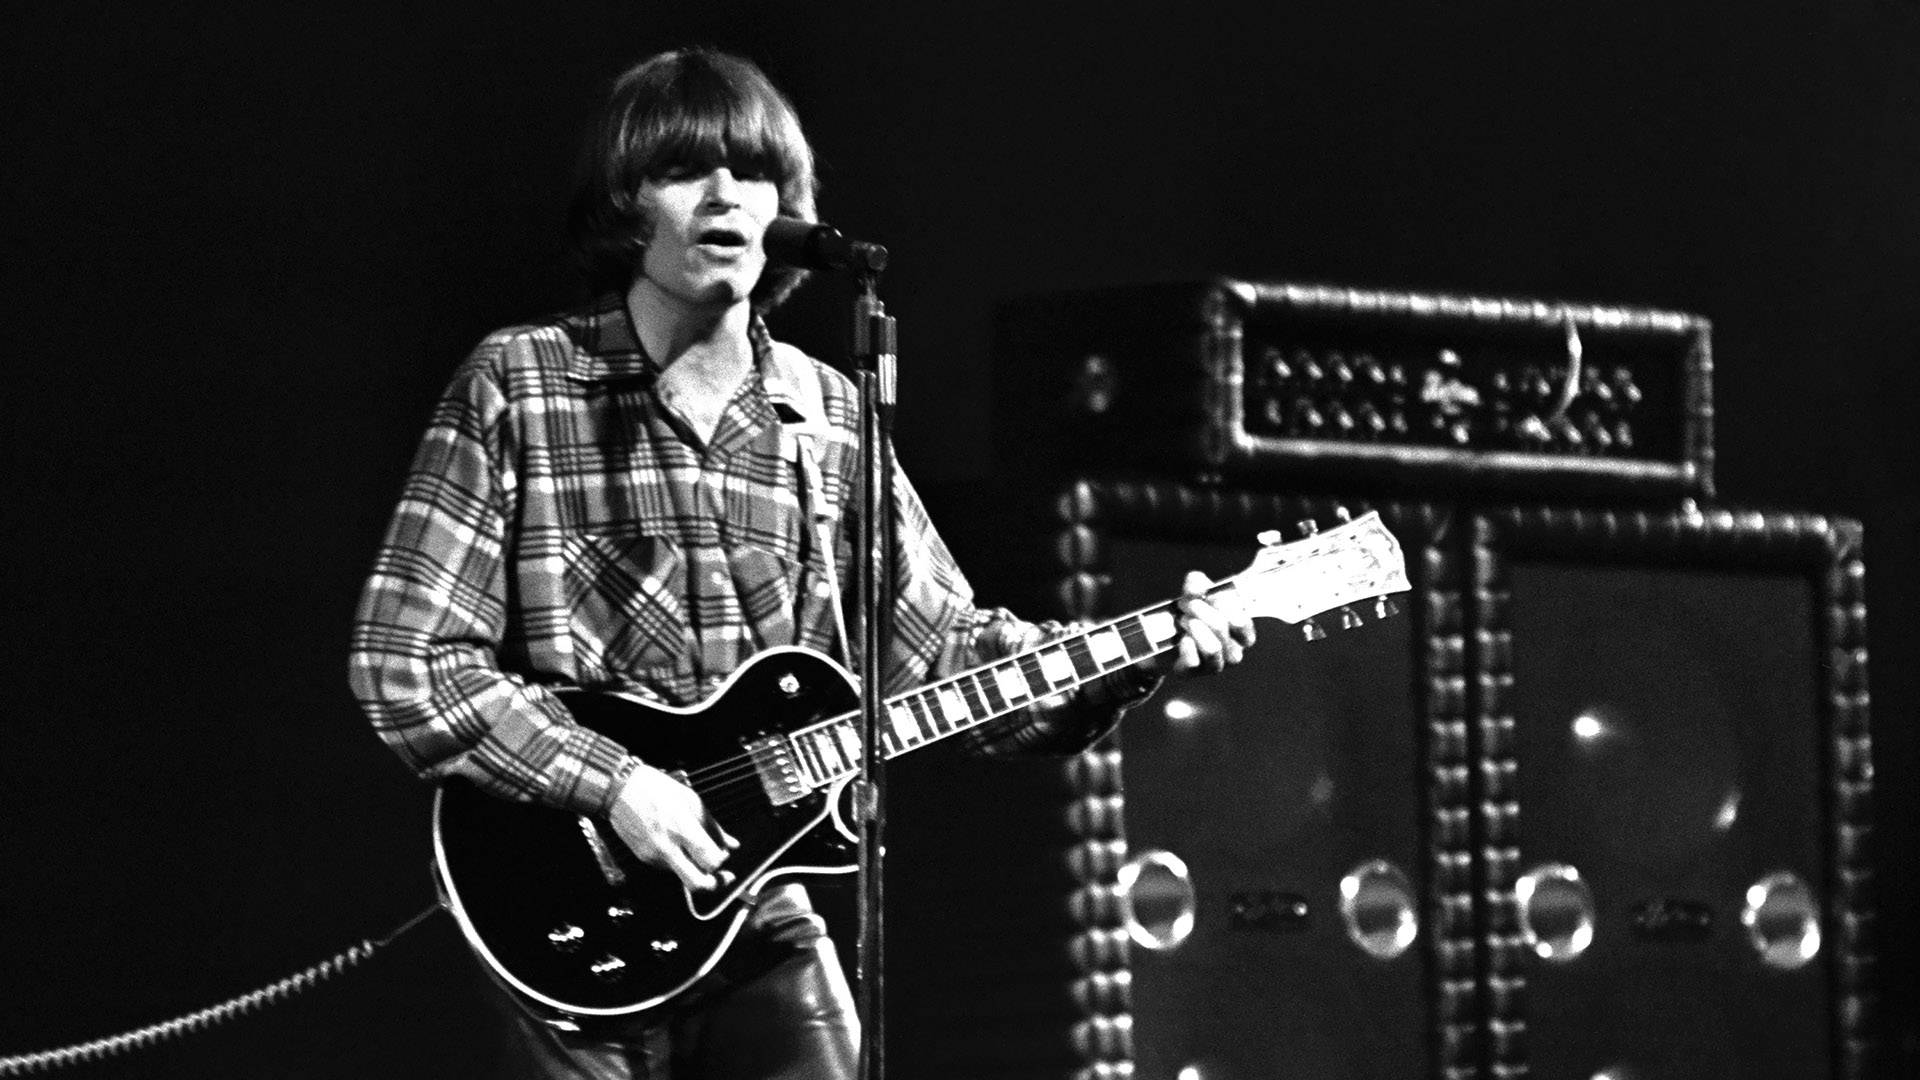 Young American Musician John Fogerty 1970 Photograph Wallpaper